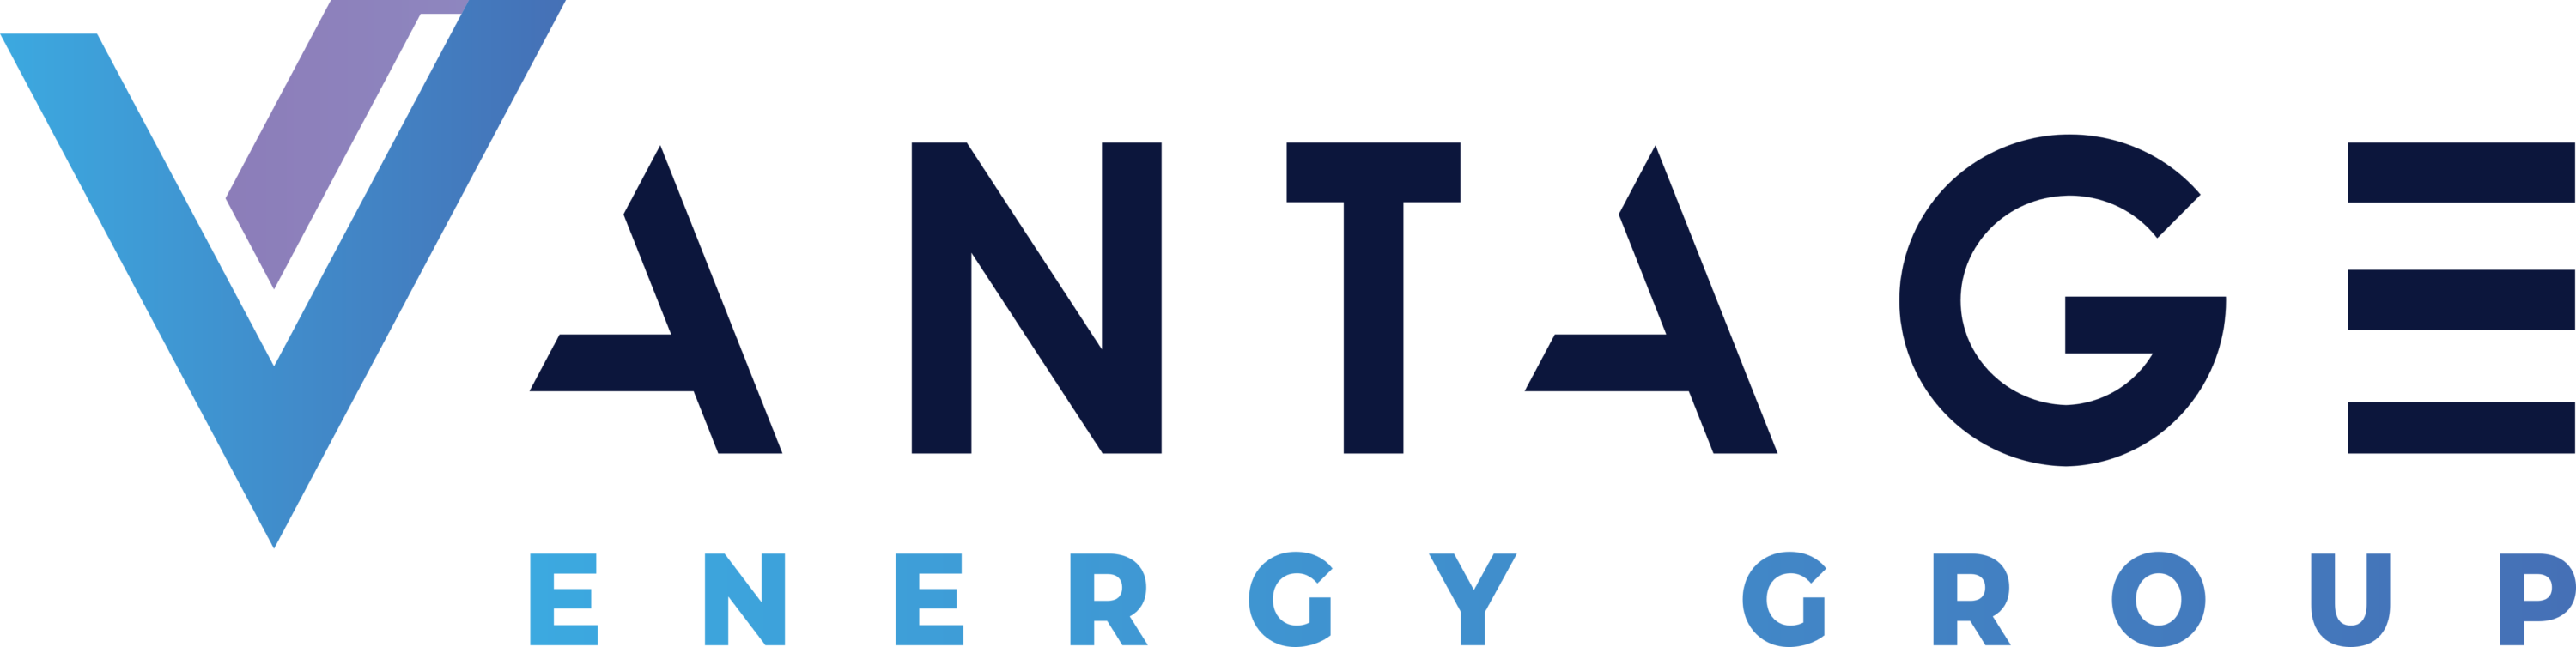 Vantage Energy Group Malaysia Logo